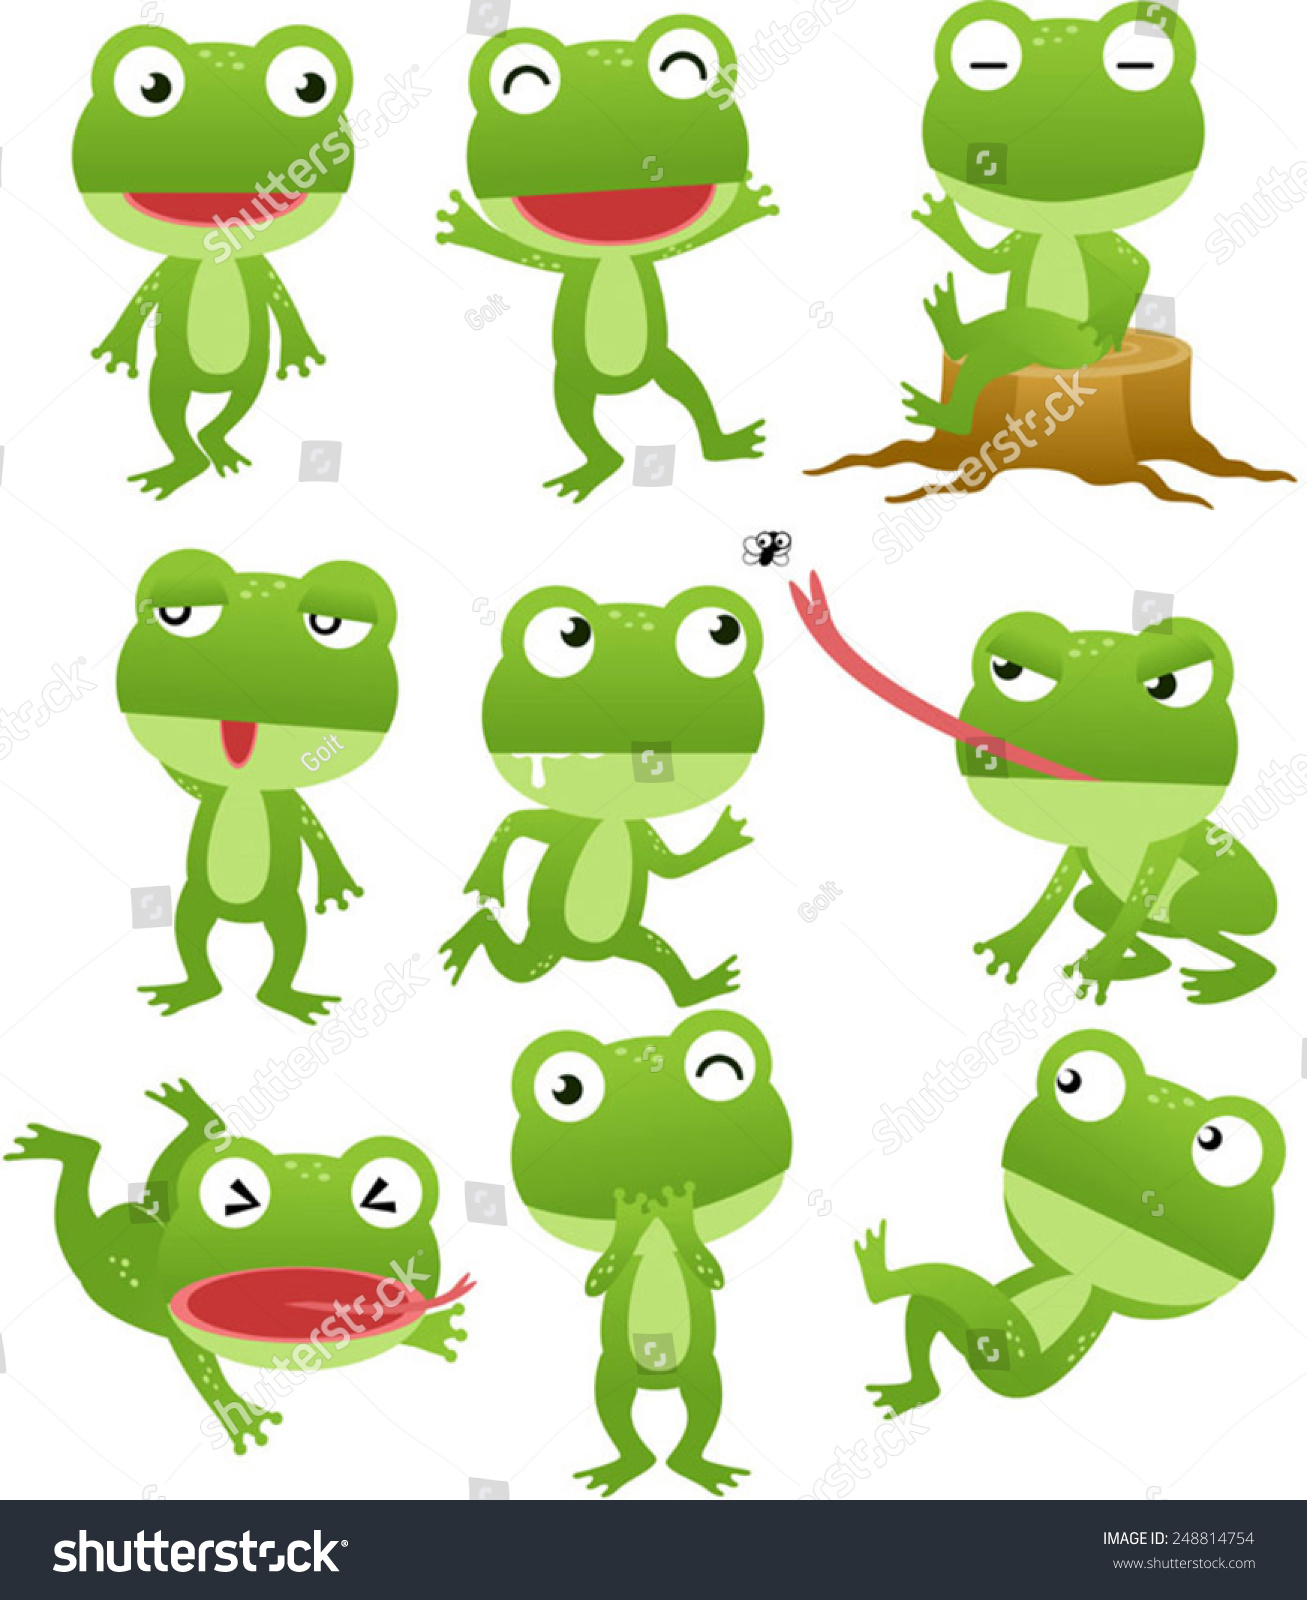 Edit Vectors Free Online - Funny frog | Shutterstock Editor